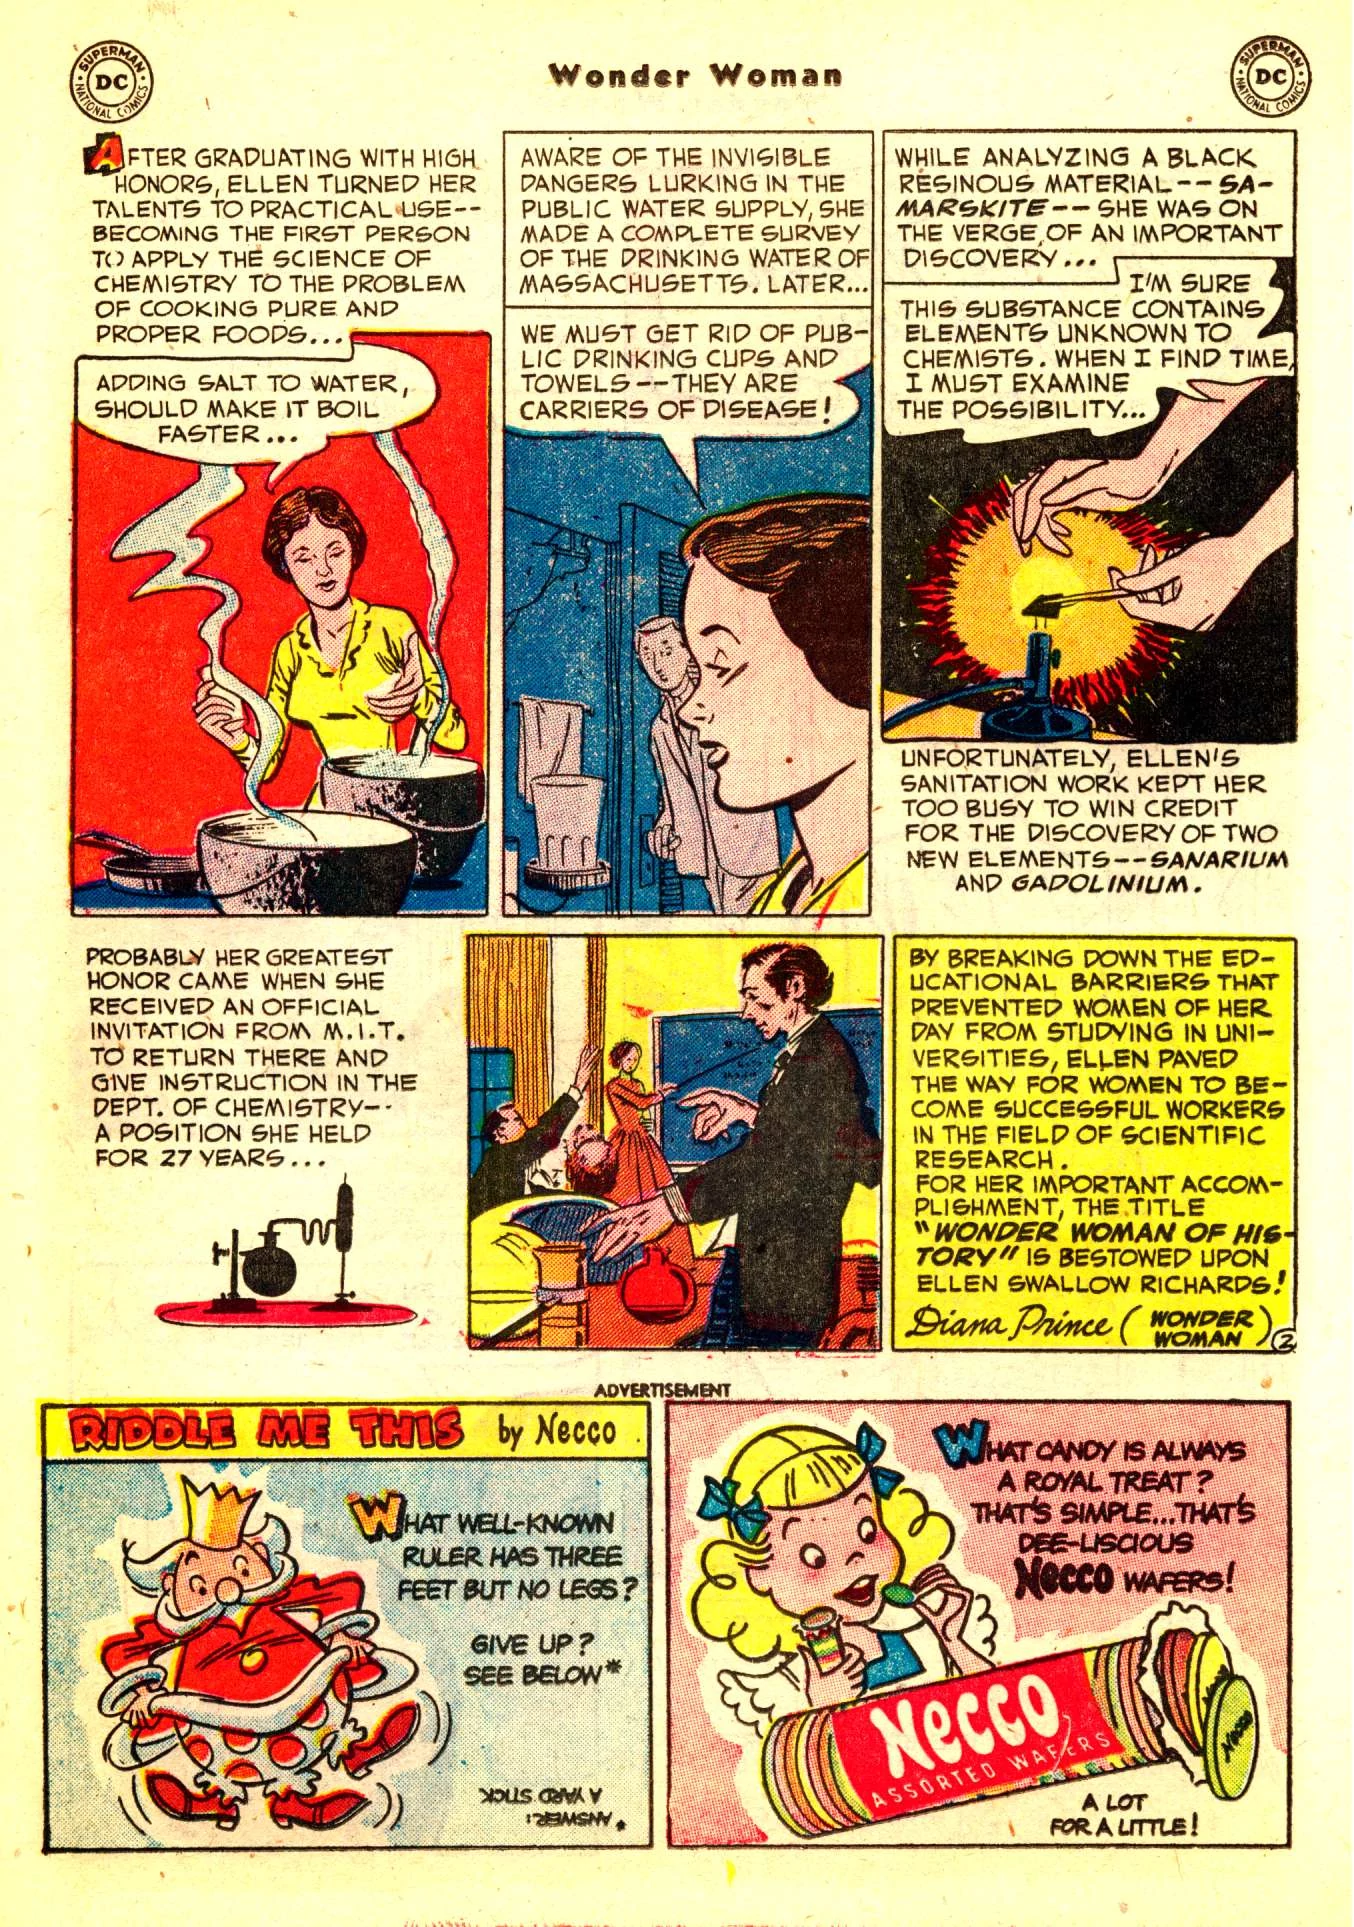 Wonder Woman #50: Ellen Swallow Richards, 1950s (2)